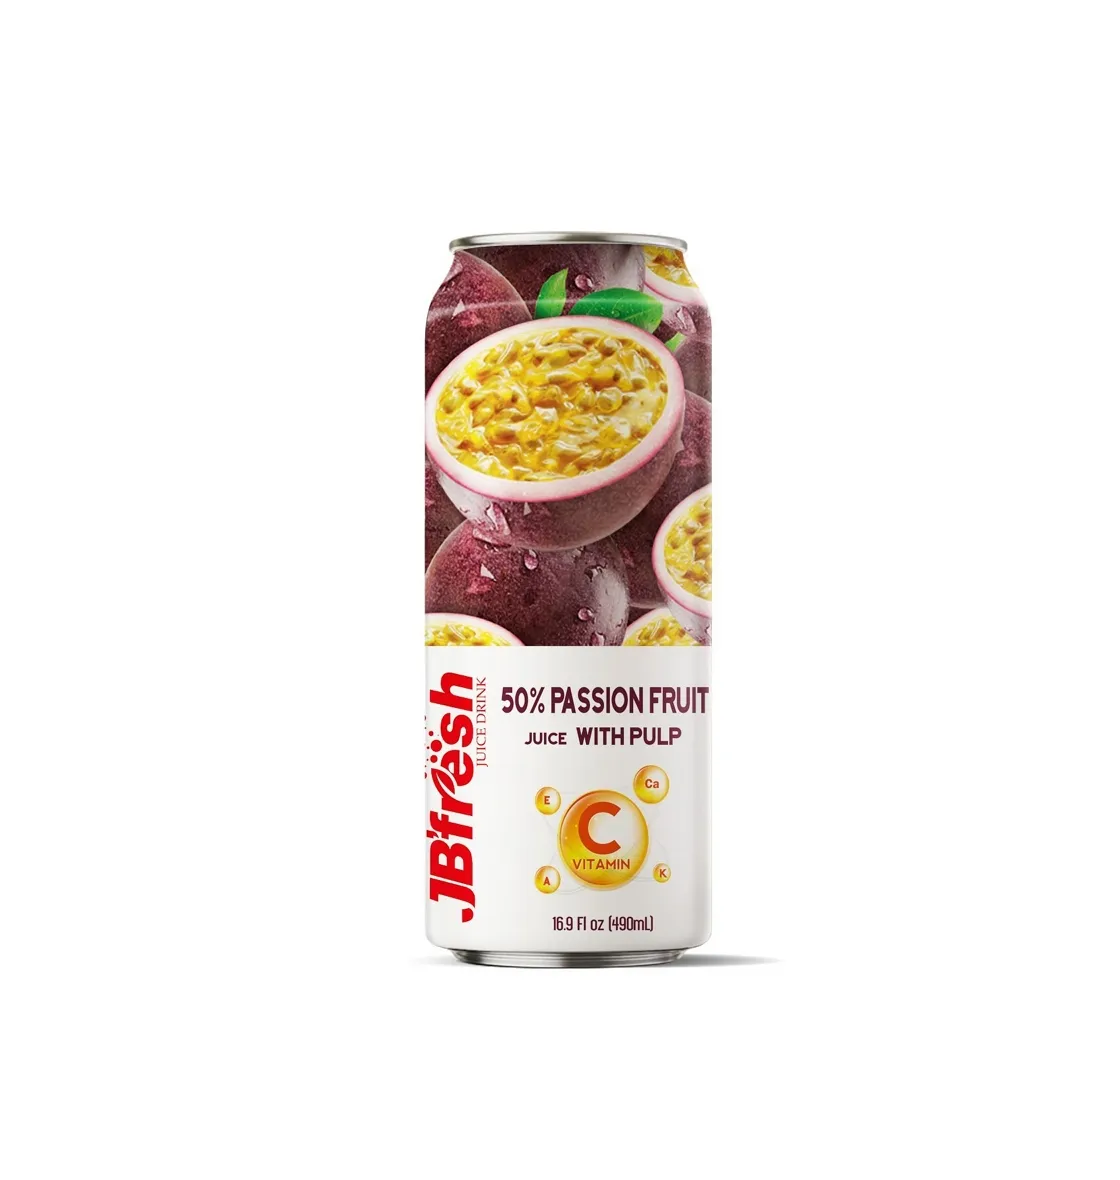 Passion Fruit Drink For Soft Drink Fresh Fruit Juice Concentrate 100% Natural Grape Juice Grape Beverage Fruit Juice